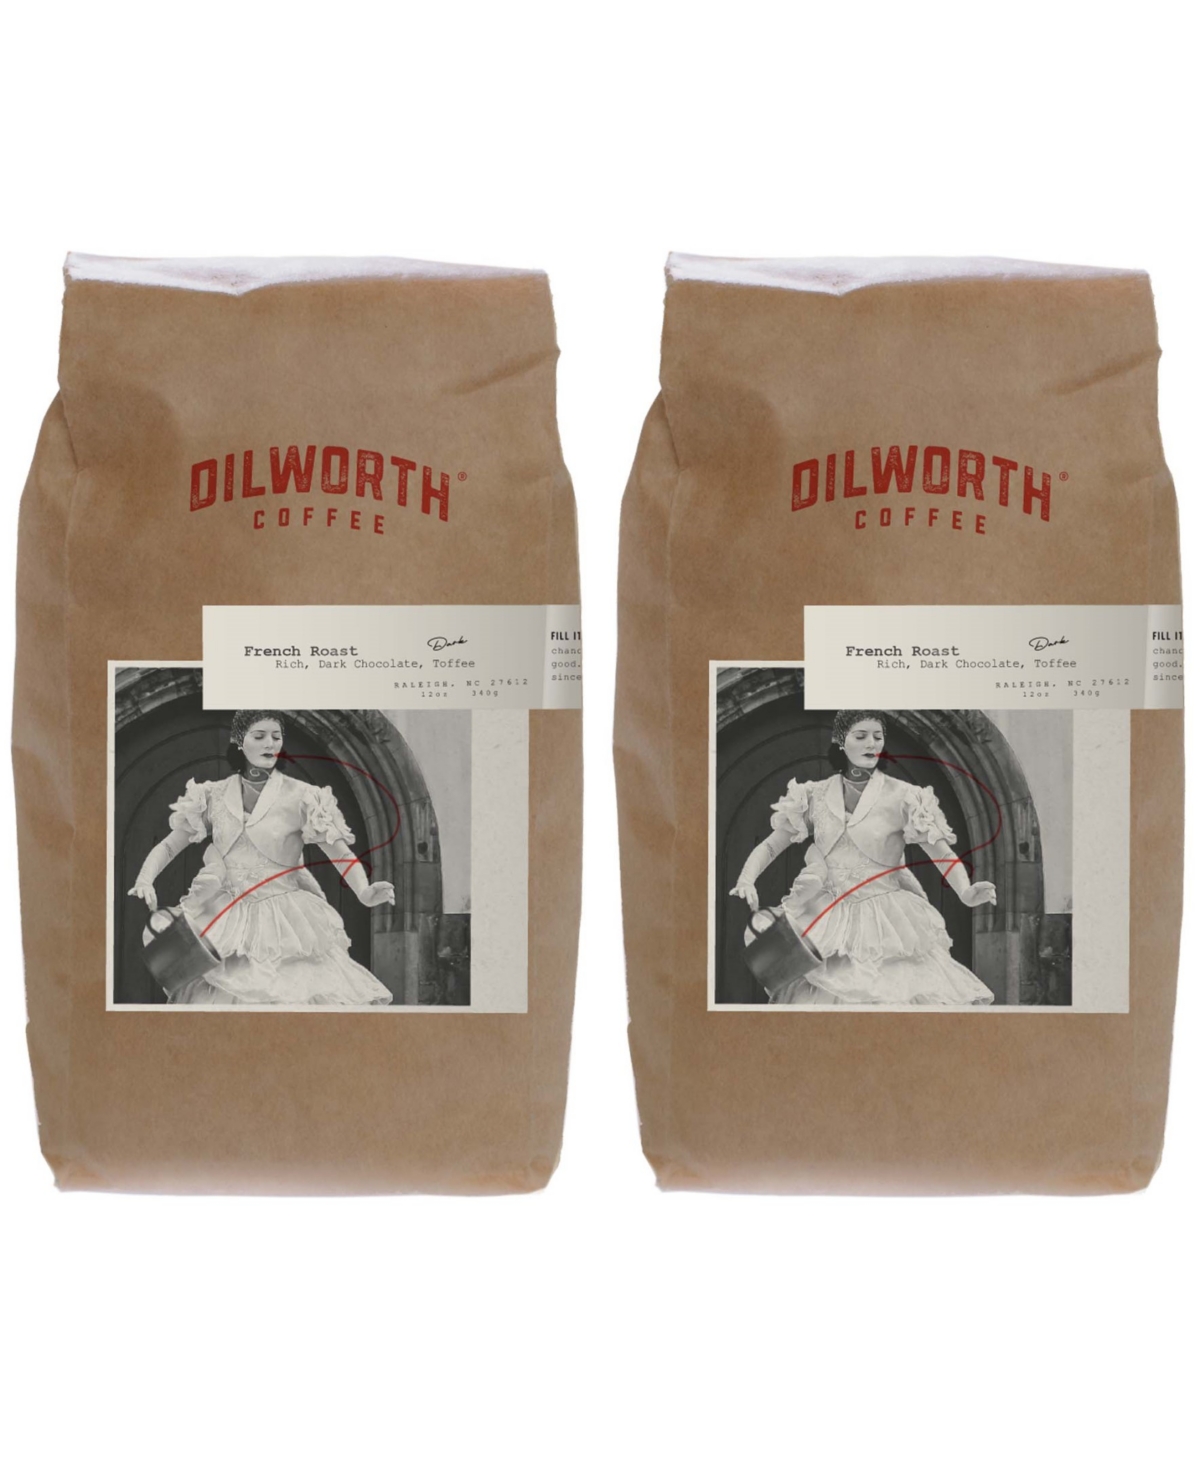 Dilworth Coffee Dark Roast Ground Coffee - French Roast, Pack of 2